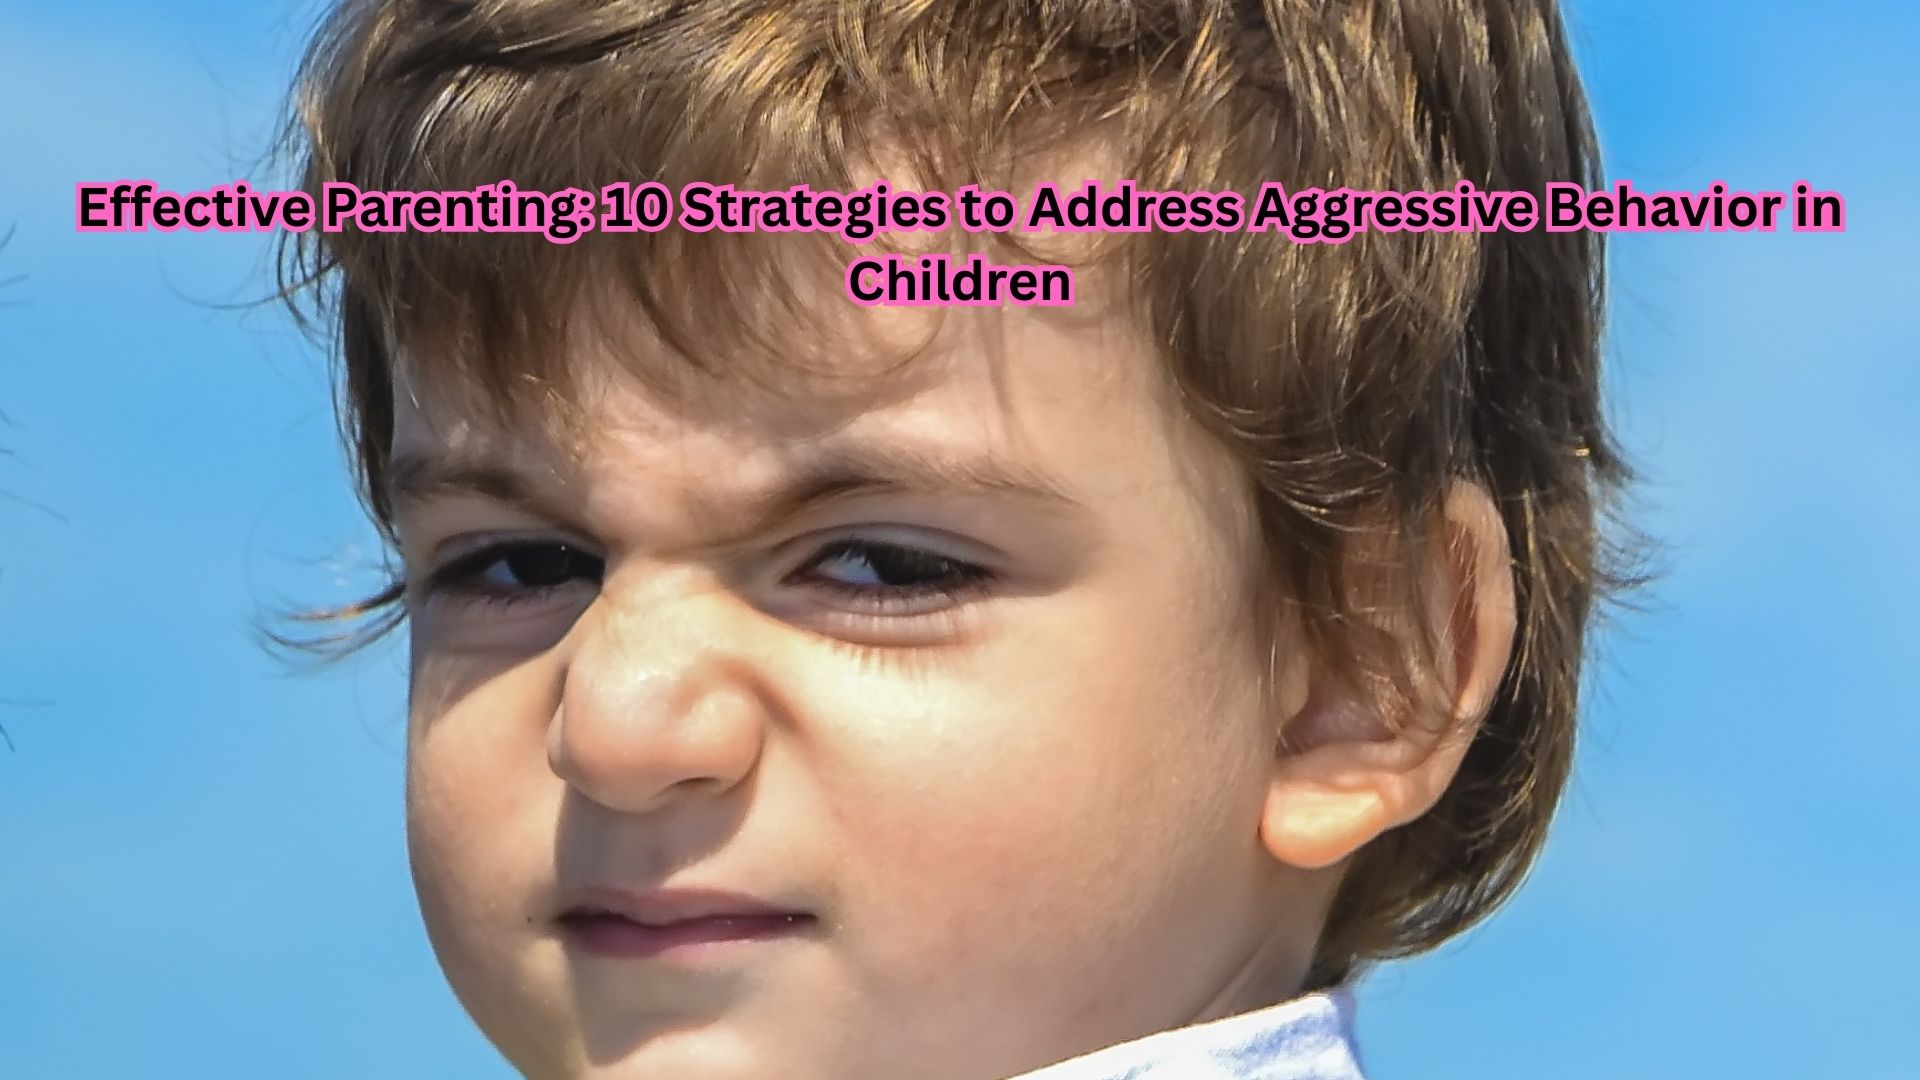 Effective Parenting: 10 Strategies to Address Aggressive Behavior in Children